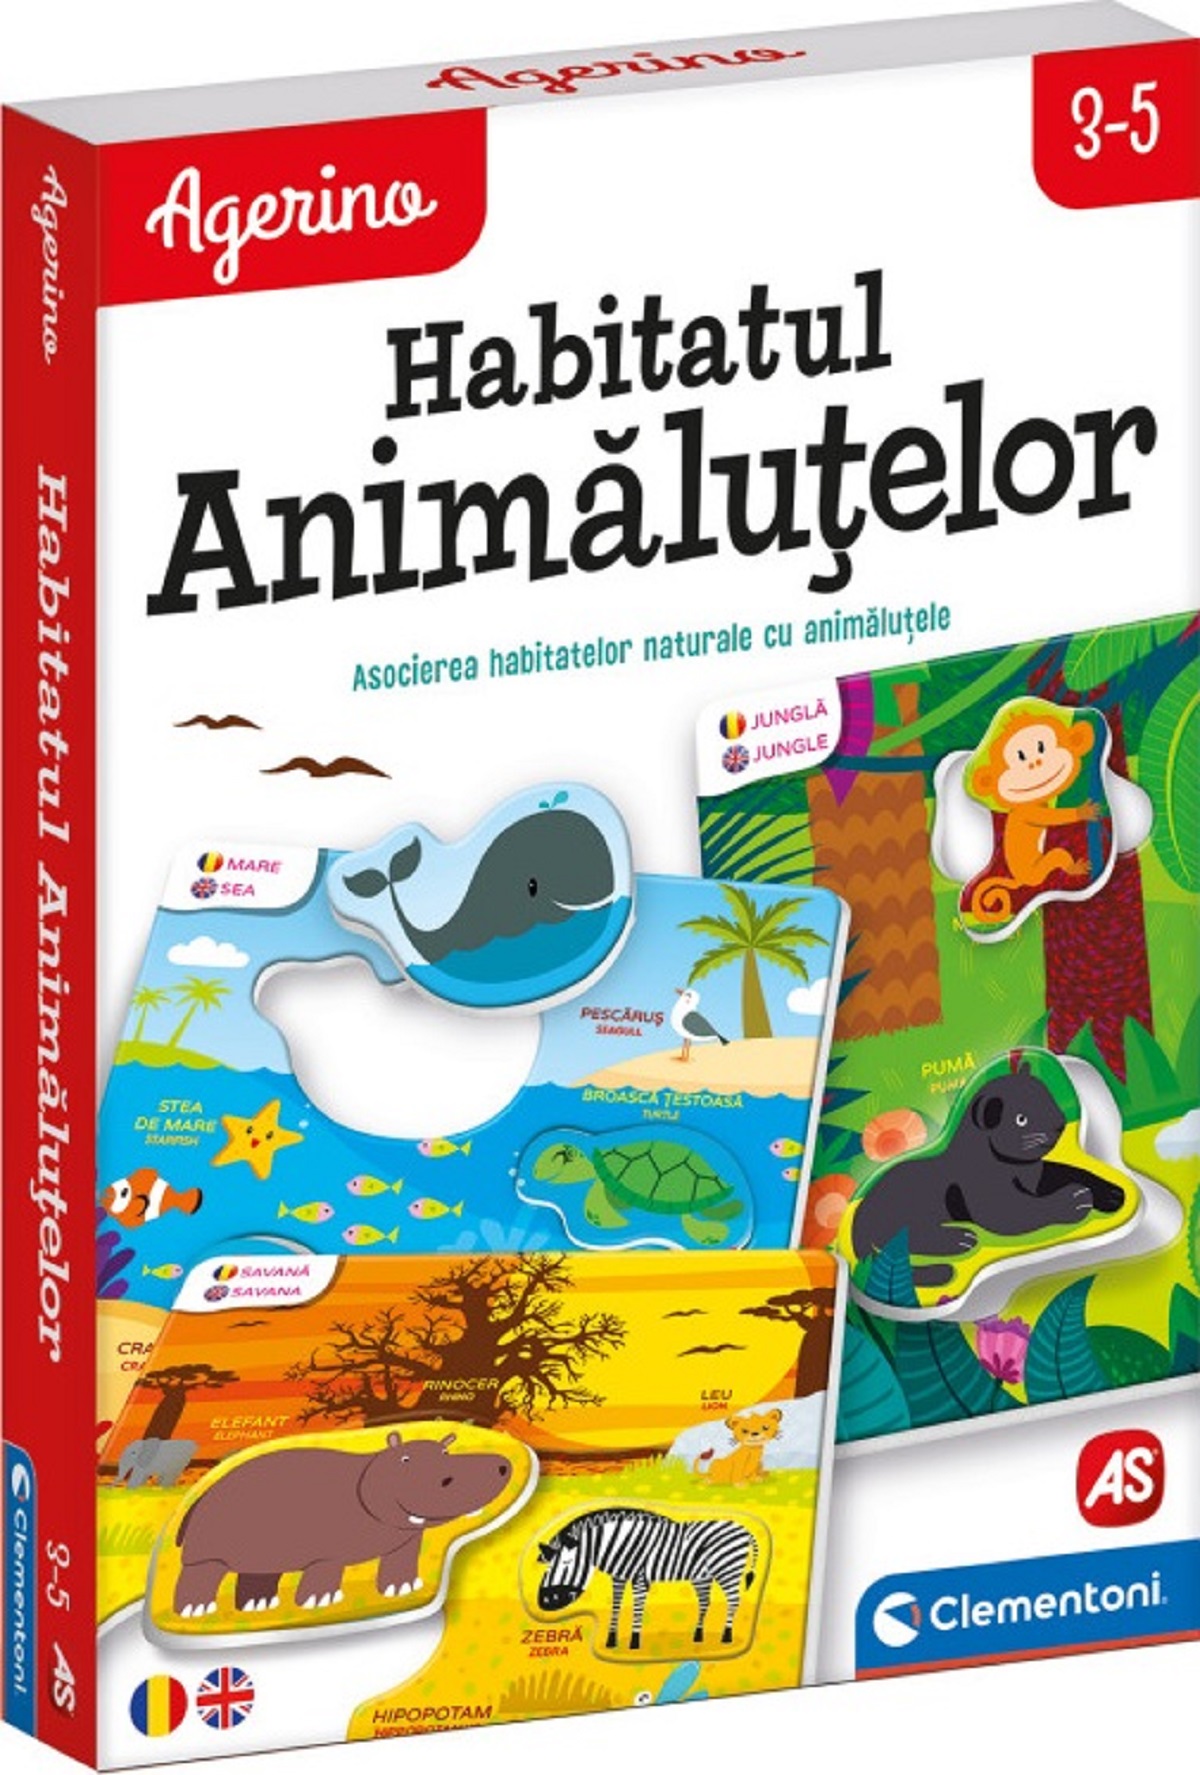 Joc educativ Agerino: Habitatul animalutelor